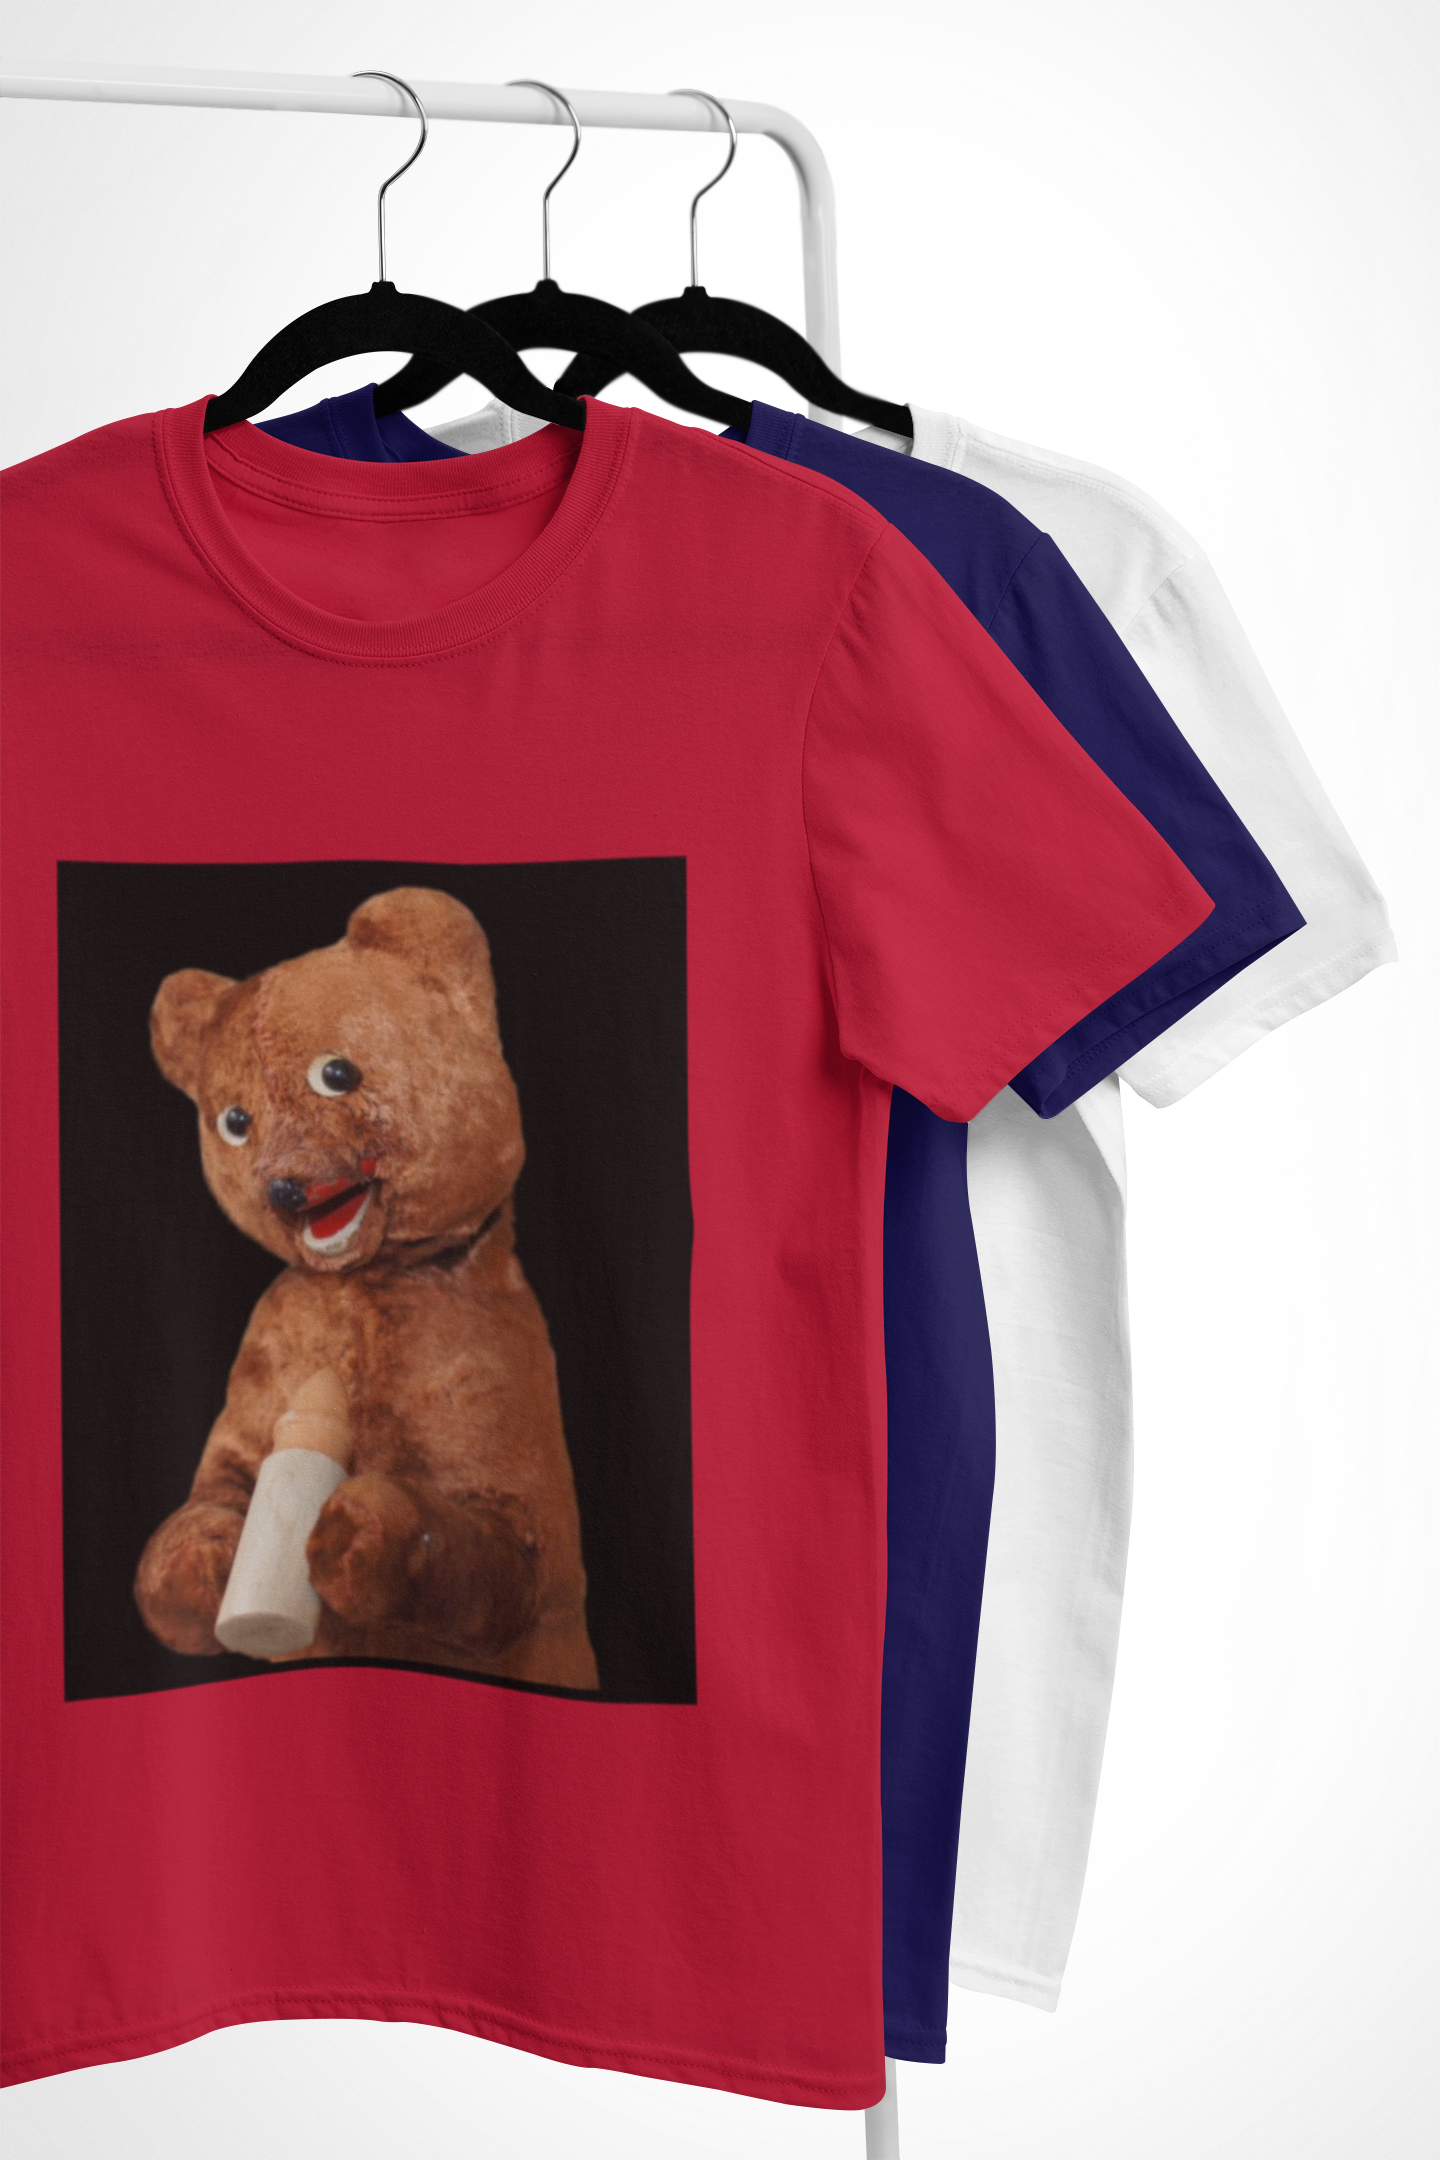 Creepy Bear Unisex Shirt